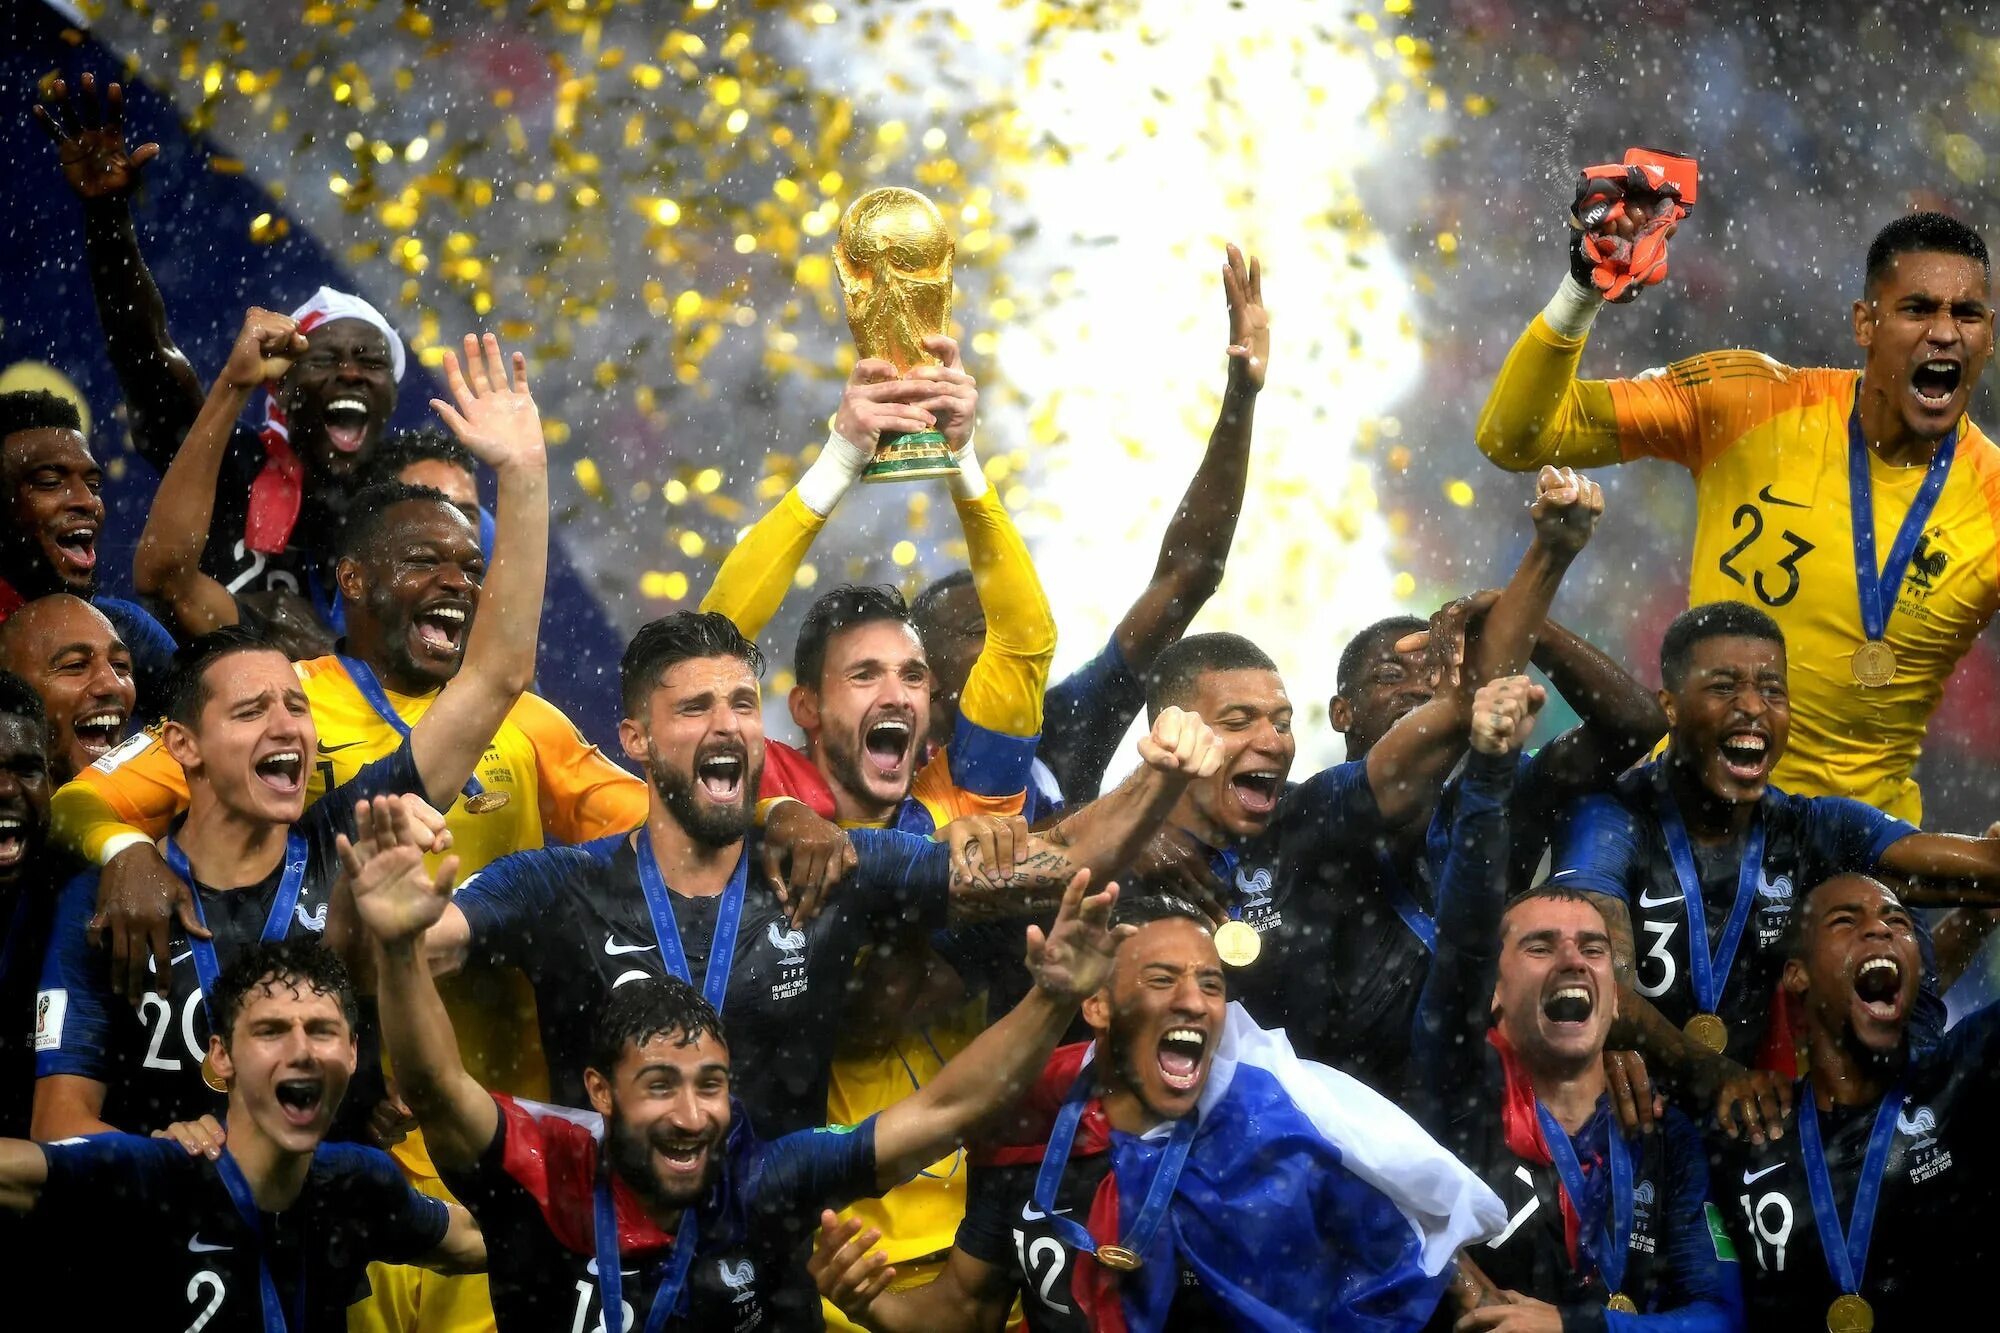 Франция чемпион какого года. Франция ЧМ 2018 чемпионы. Сборная Франции 2018 чемпионы.